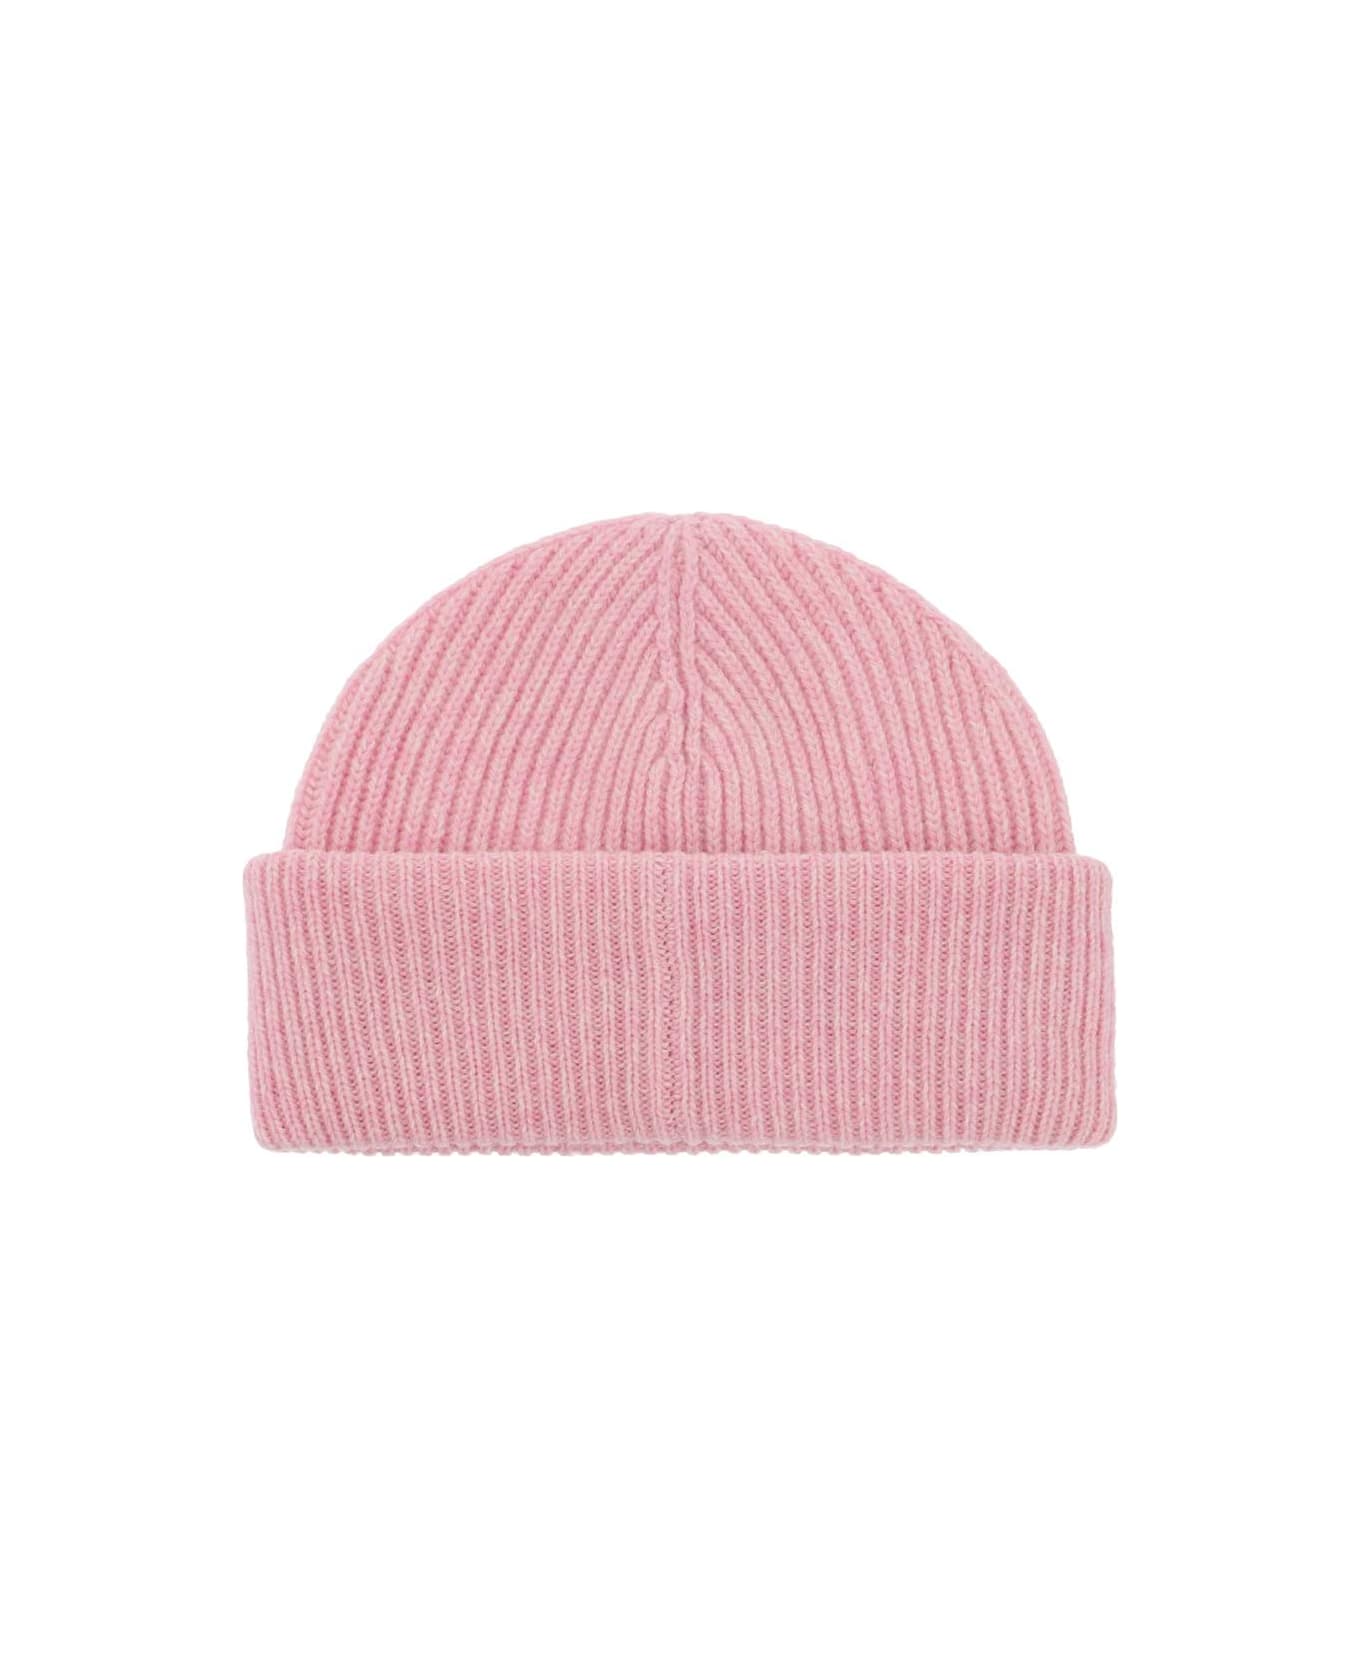 Ganni Pink Wool Blend Cap - MAUVE CHALK (Pink) 帽子